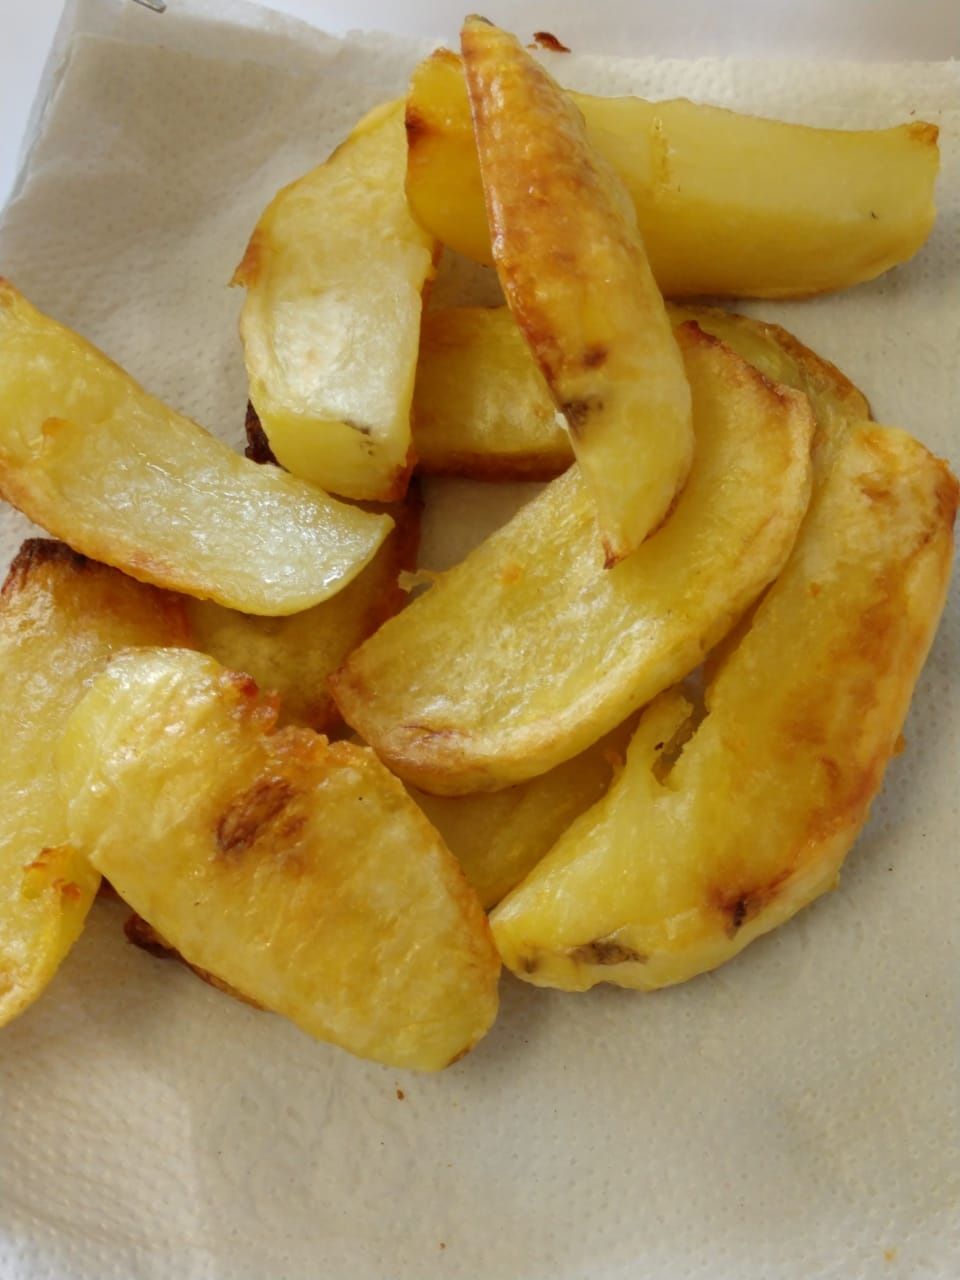 Batatas fritas no forno